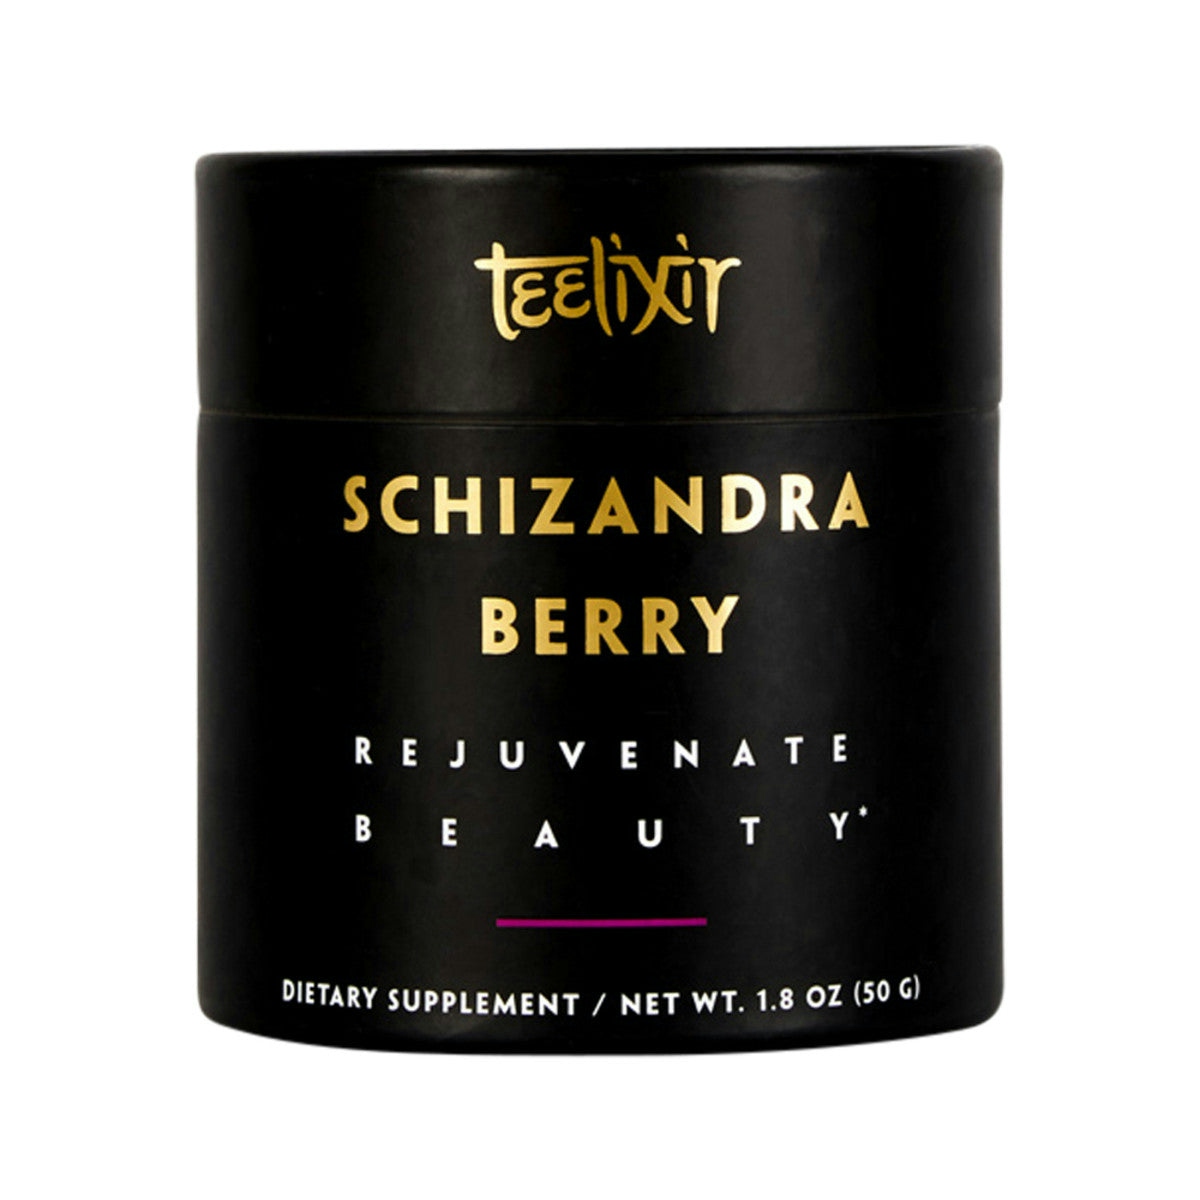 image of Teelixir Schizandra Berry (Rejuvenate Beauty) 50g on white background